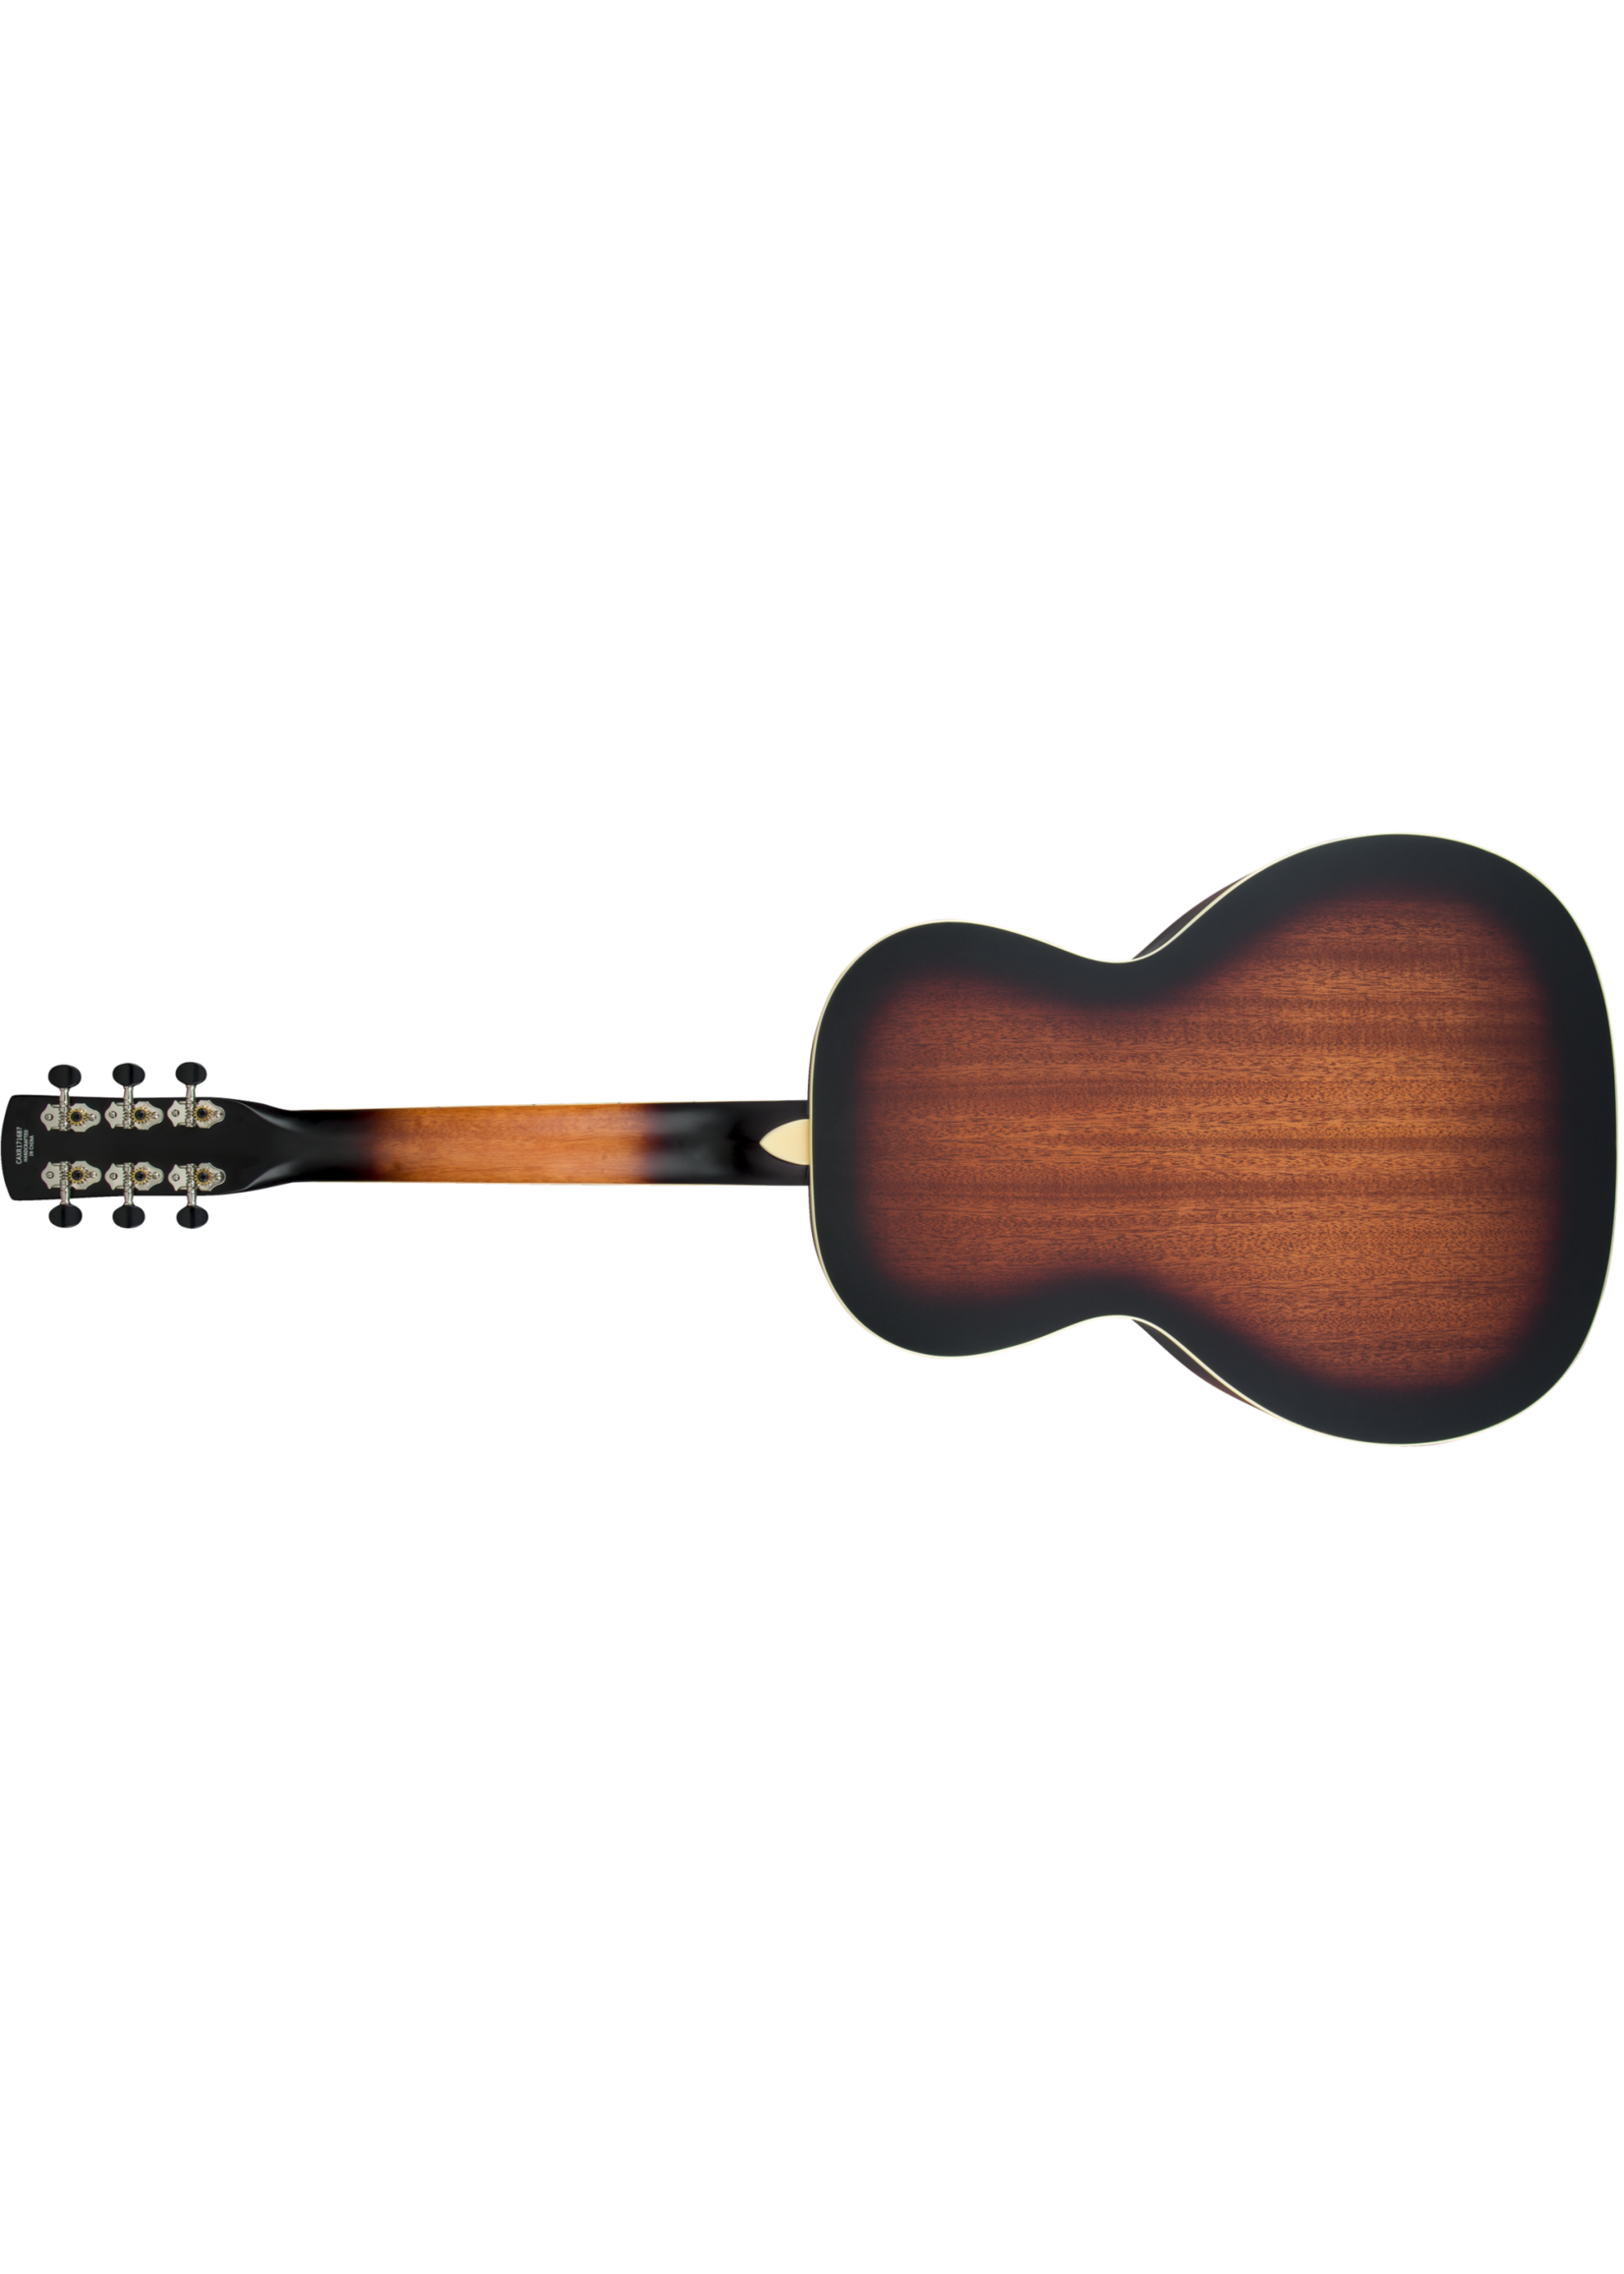 Gretsch Gretsch G9220 Bobtail Round-Neck Acoustic-Electric Resonator Guitar